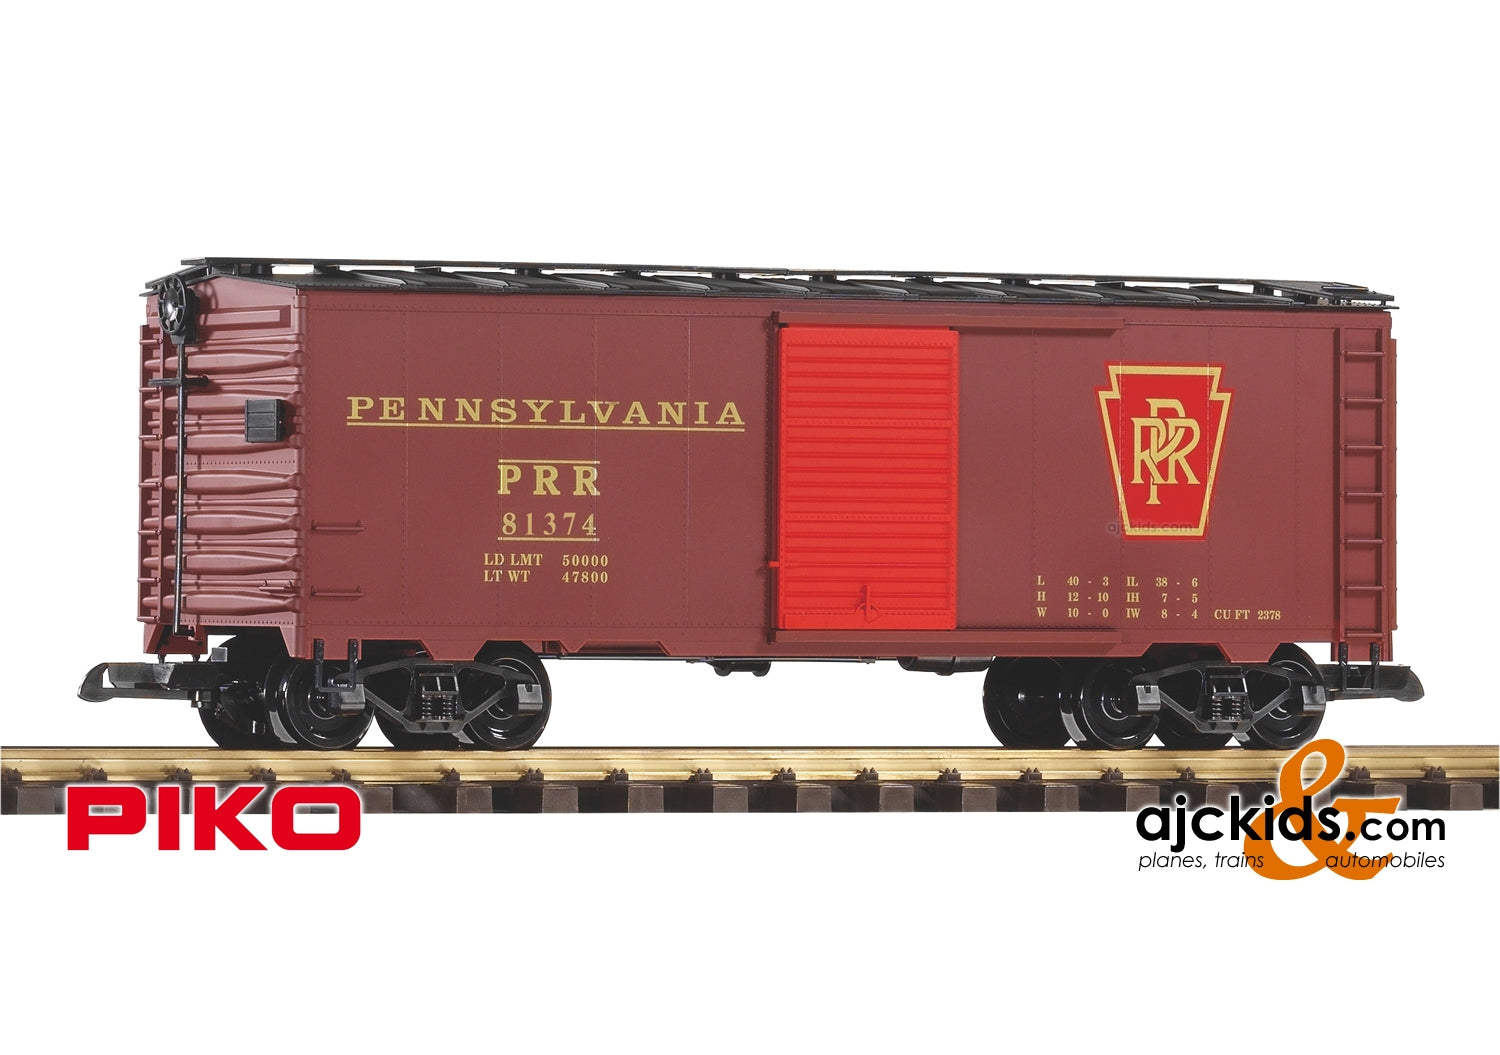 Piko 38825 - PRR Steel Boxcar 81374, Tuscan (New #)